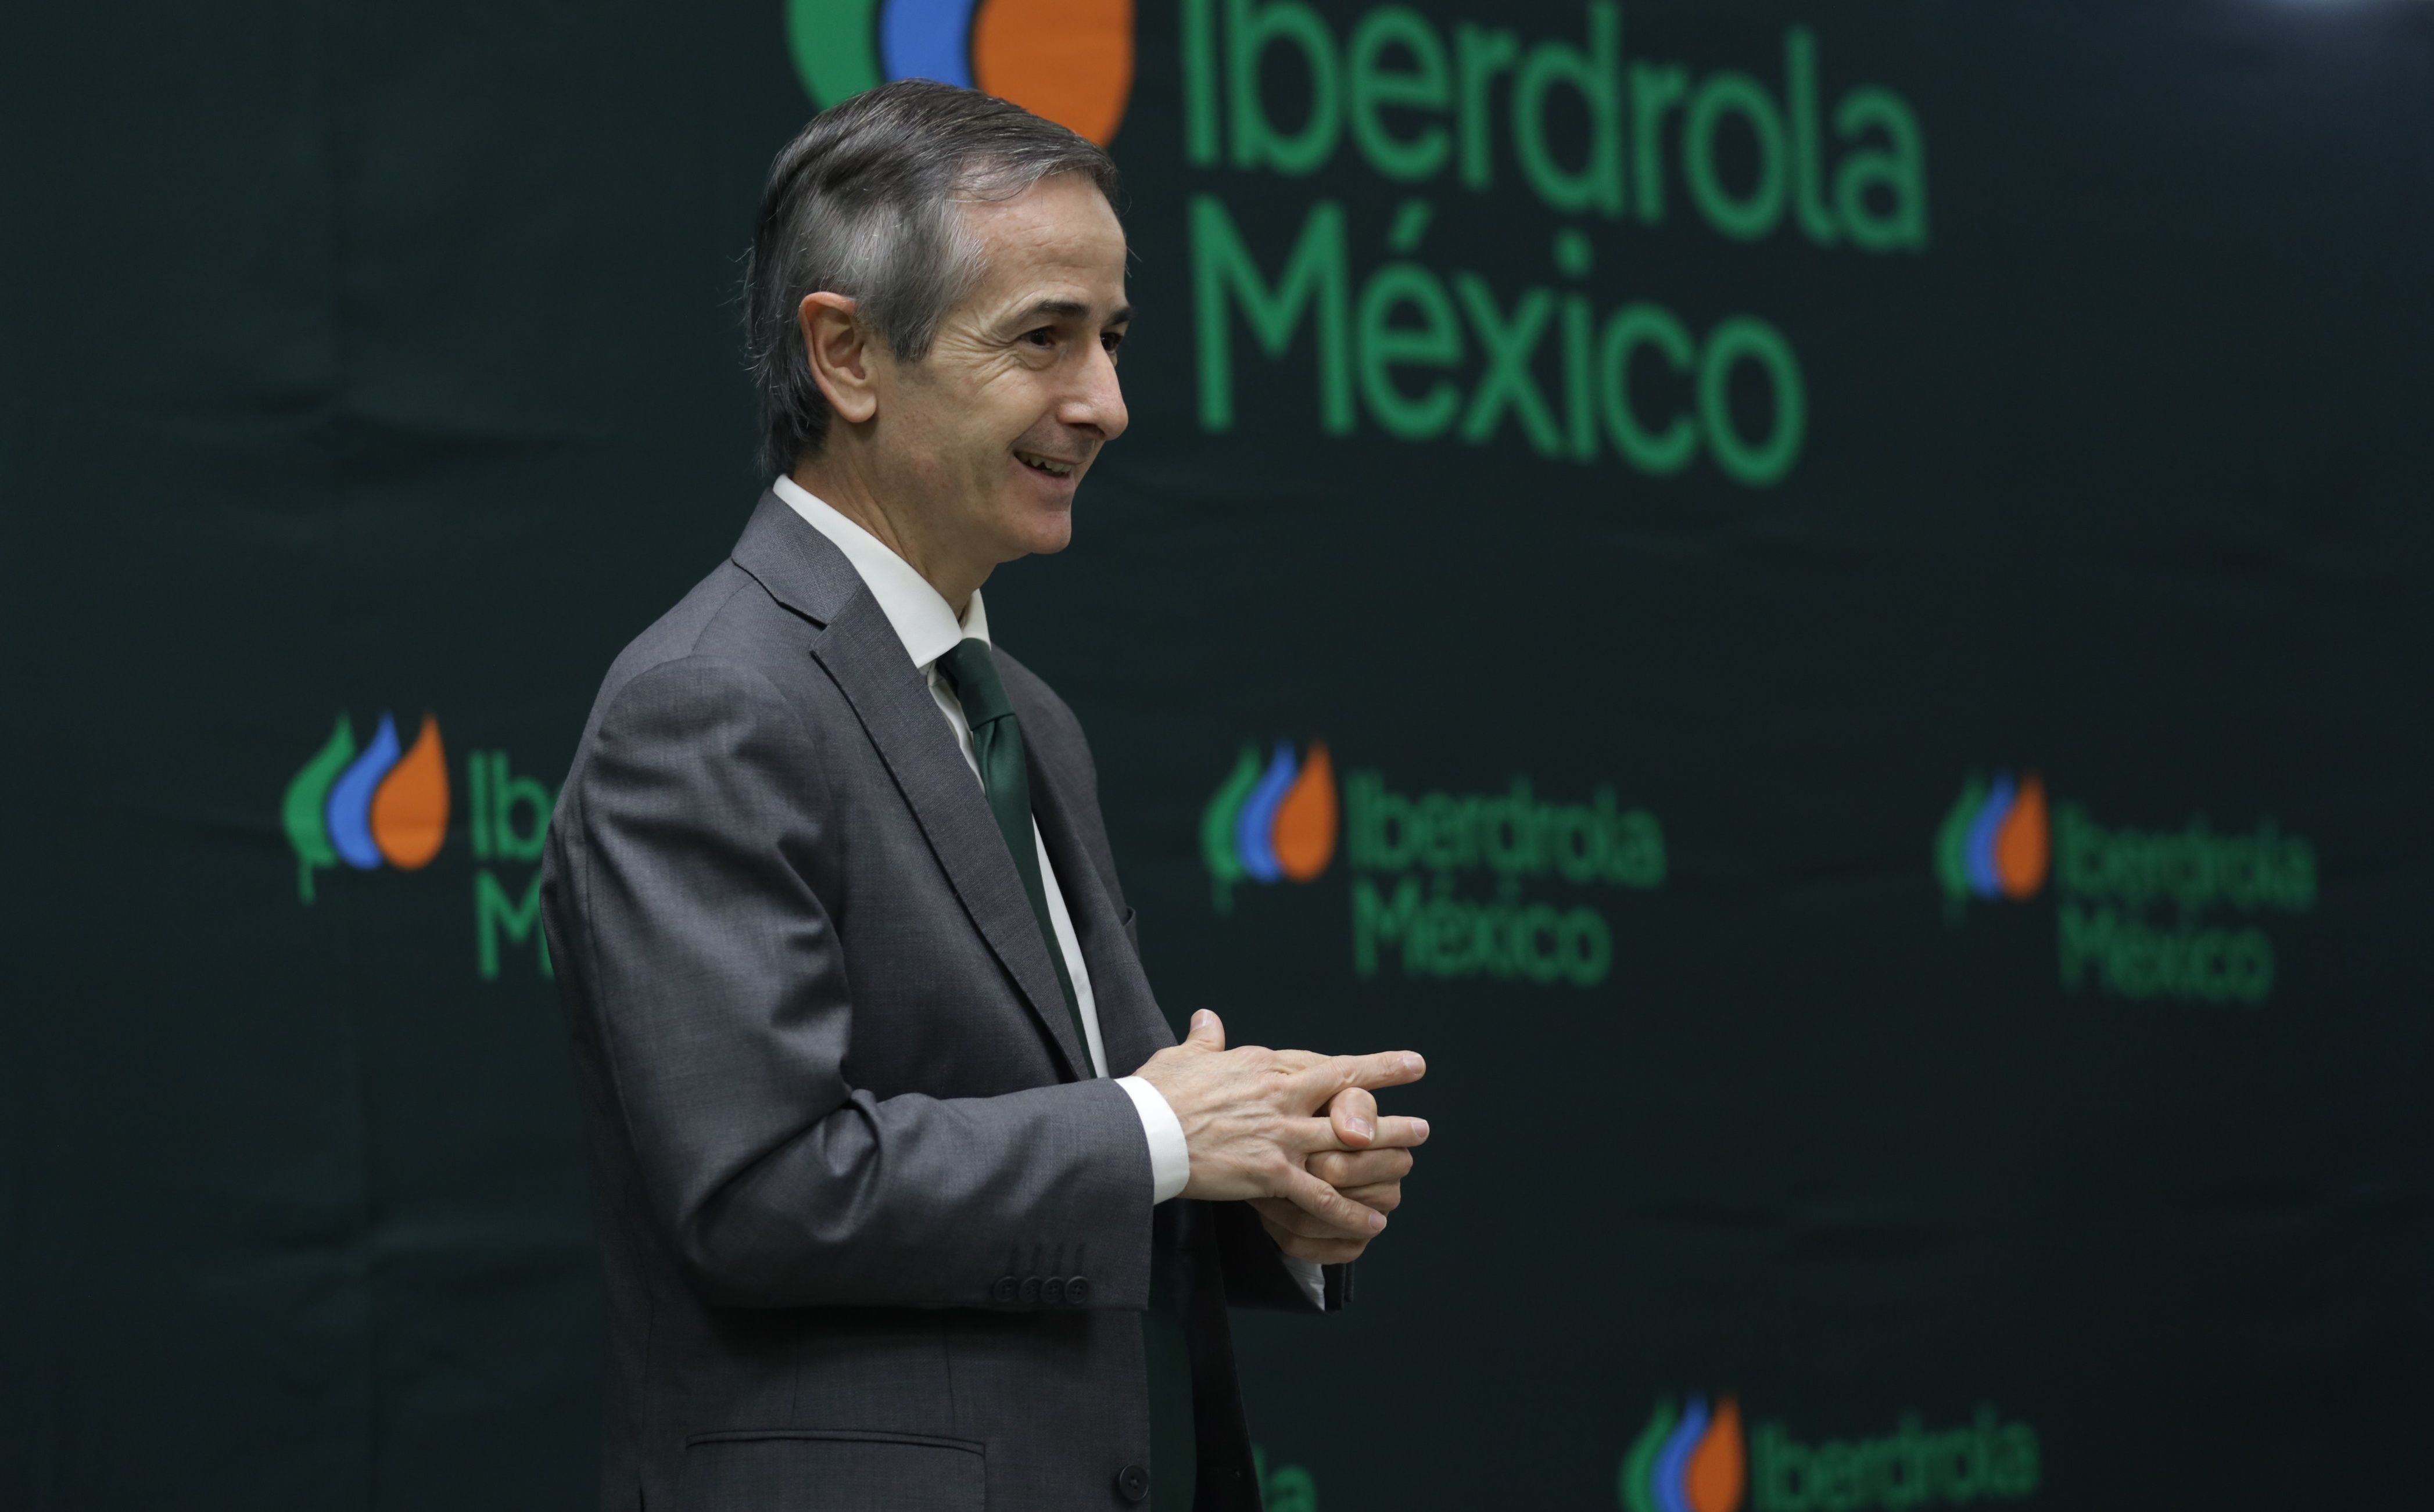 Fotografia Enrique Alba, CEO de Iberdrola México